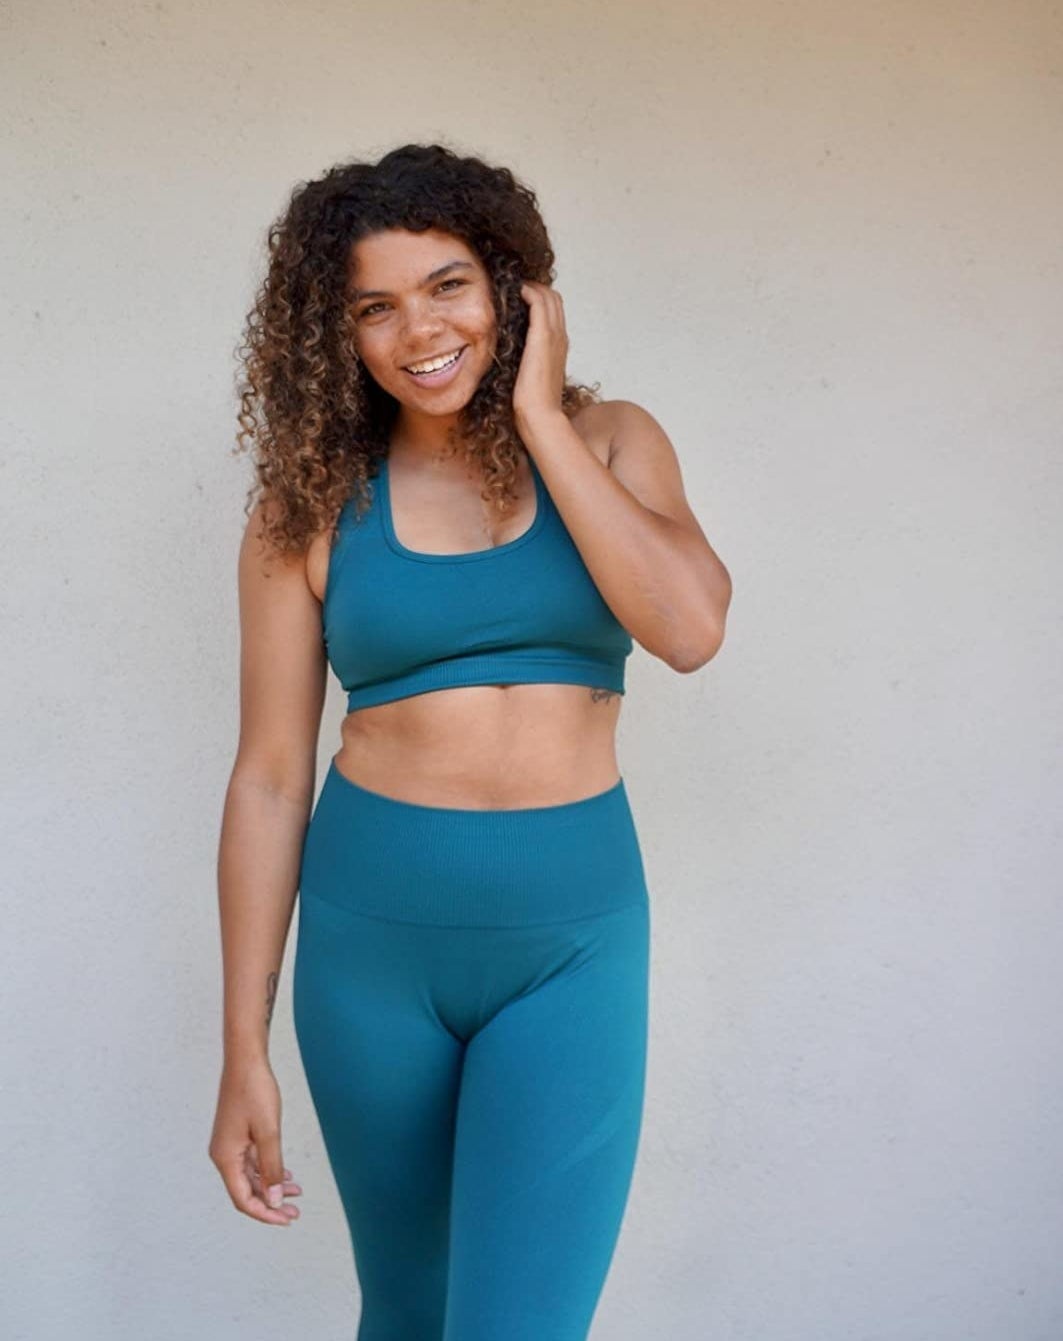 Can I Wear A Sports Bra To The Gym? – solowomen